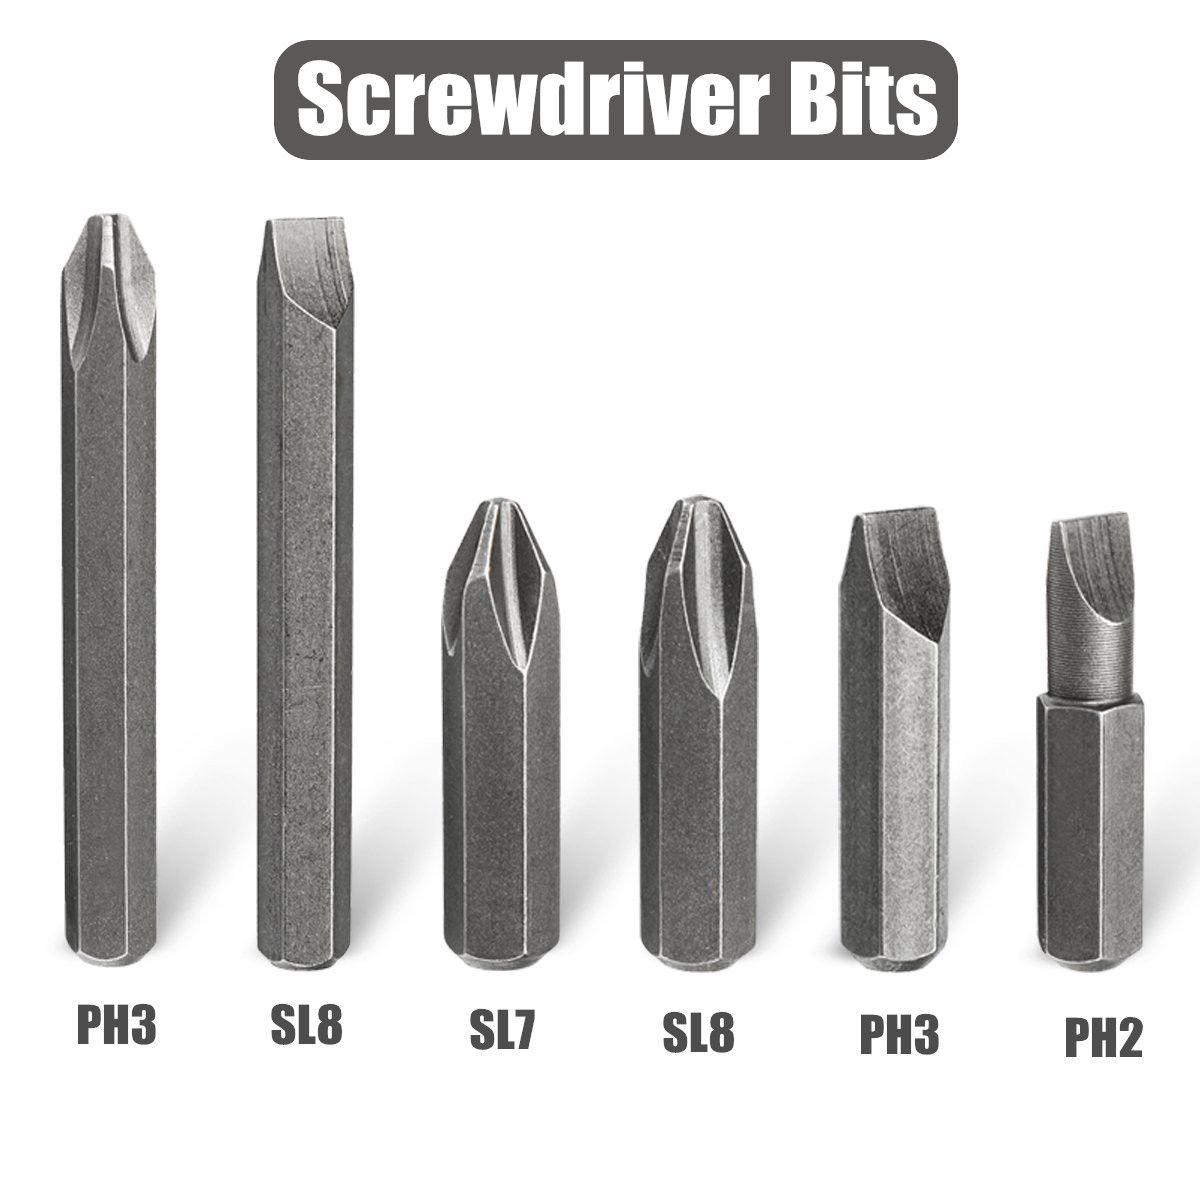 Manual-Impact-Driver-Kit-Screwdriver-14-Inch-Drive-Hammer-Screw-Socket-Drive-Tool-With-Bits-1376681